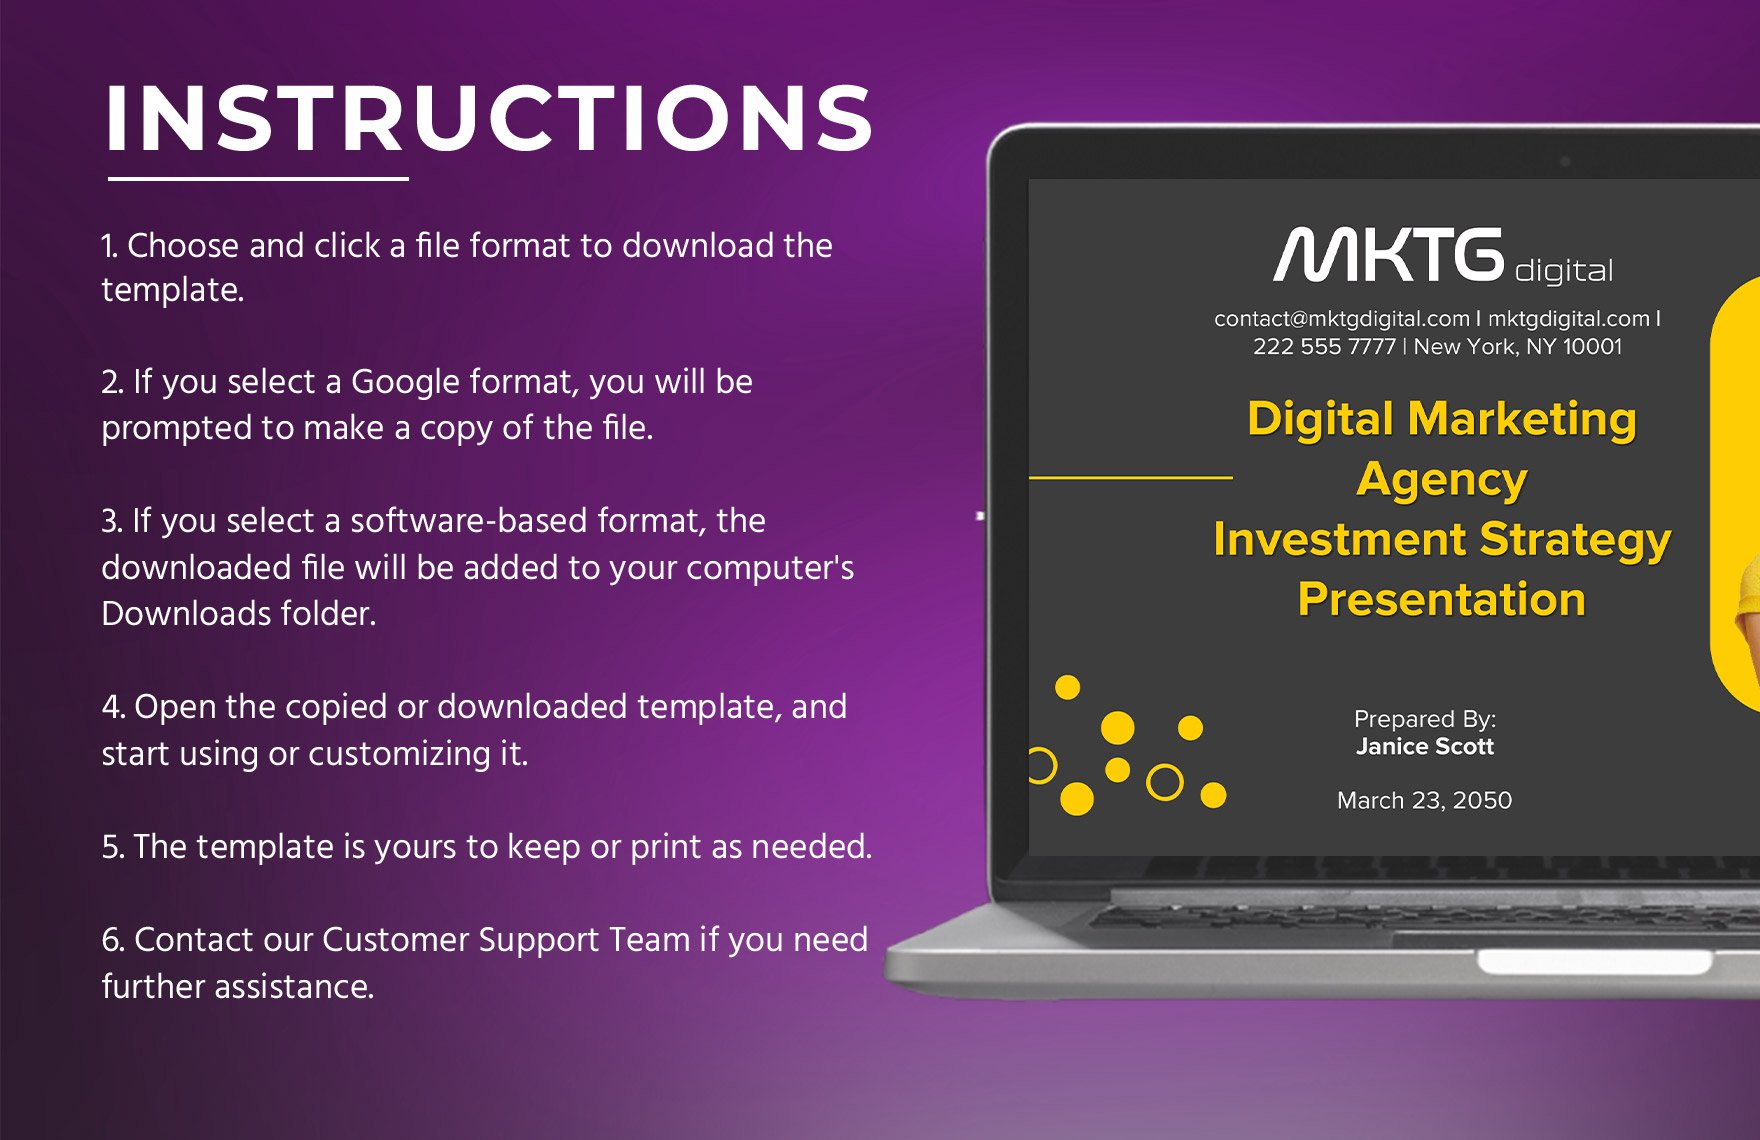 Digital Marketing Agency Investment Strategy Presentation Template